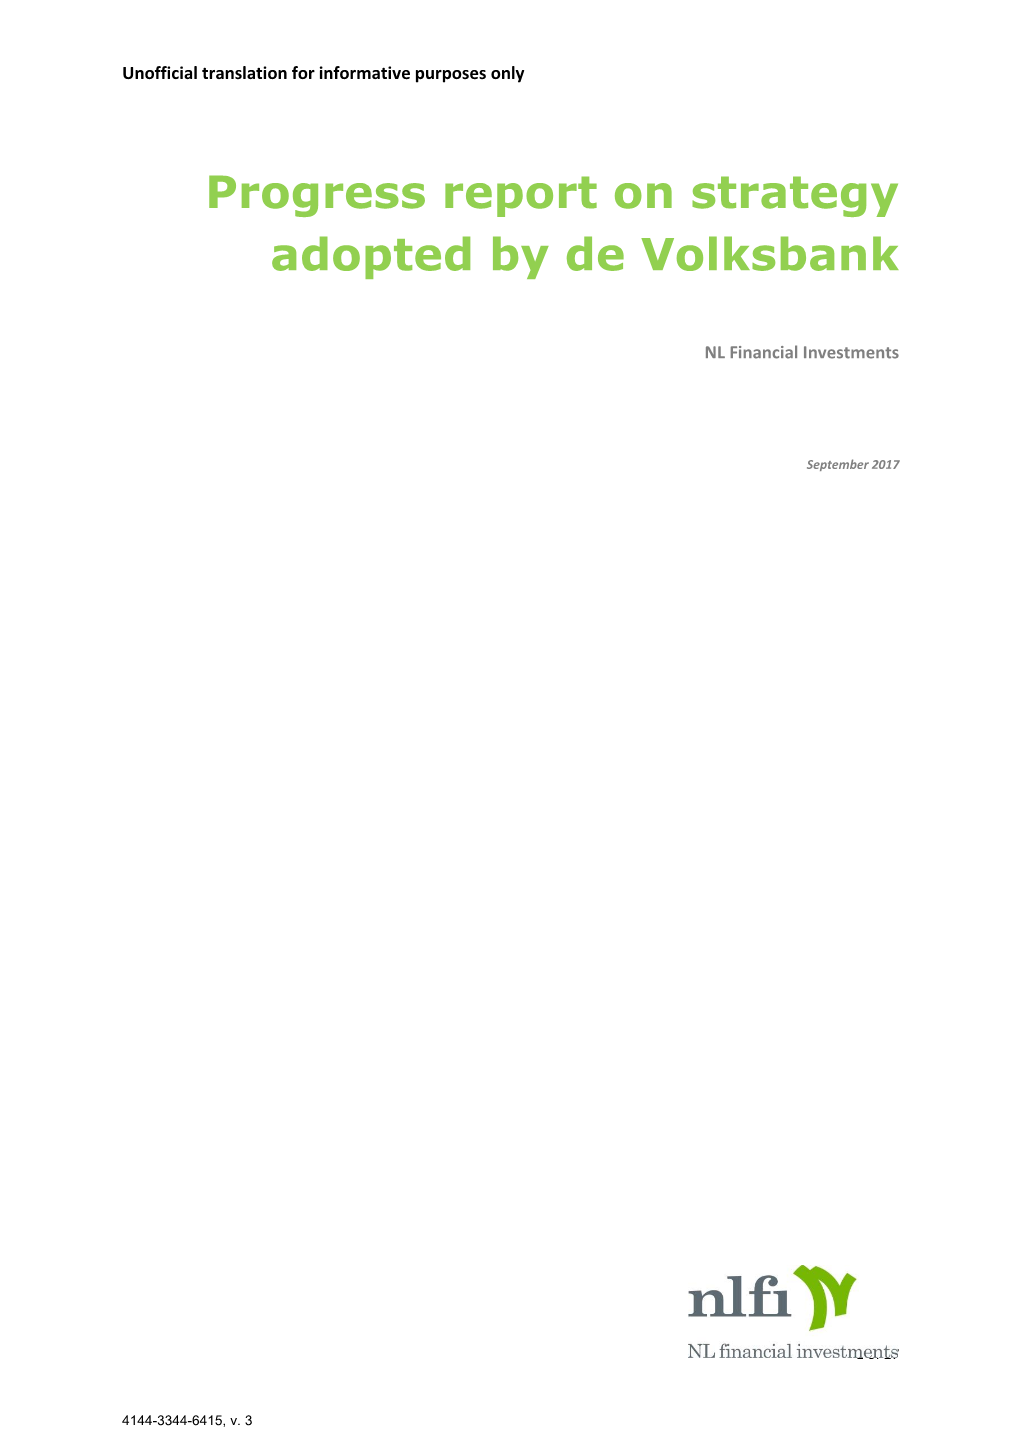 Unofficial Translation Progress Report De Volksbank